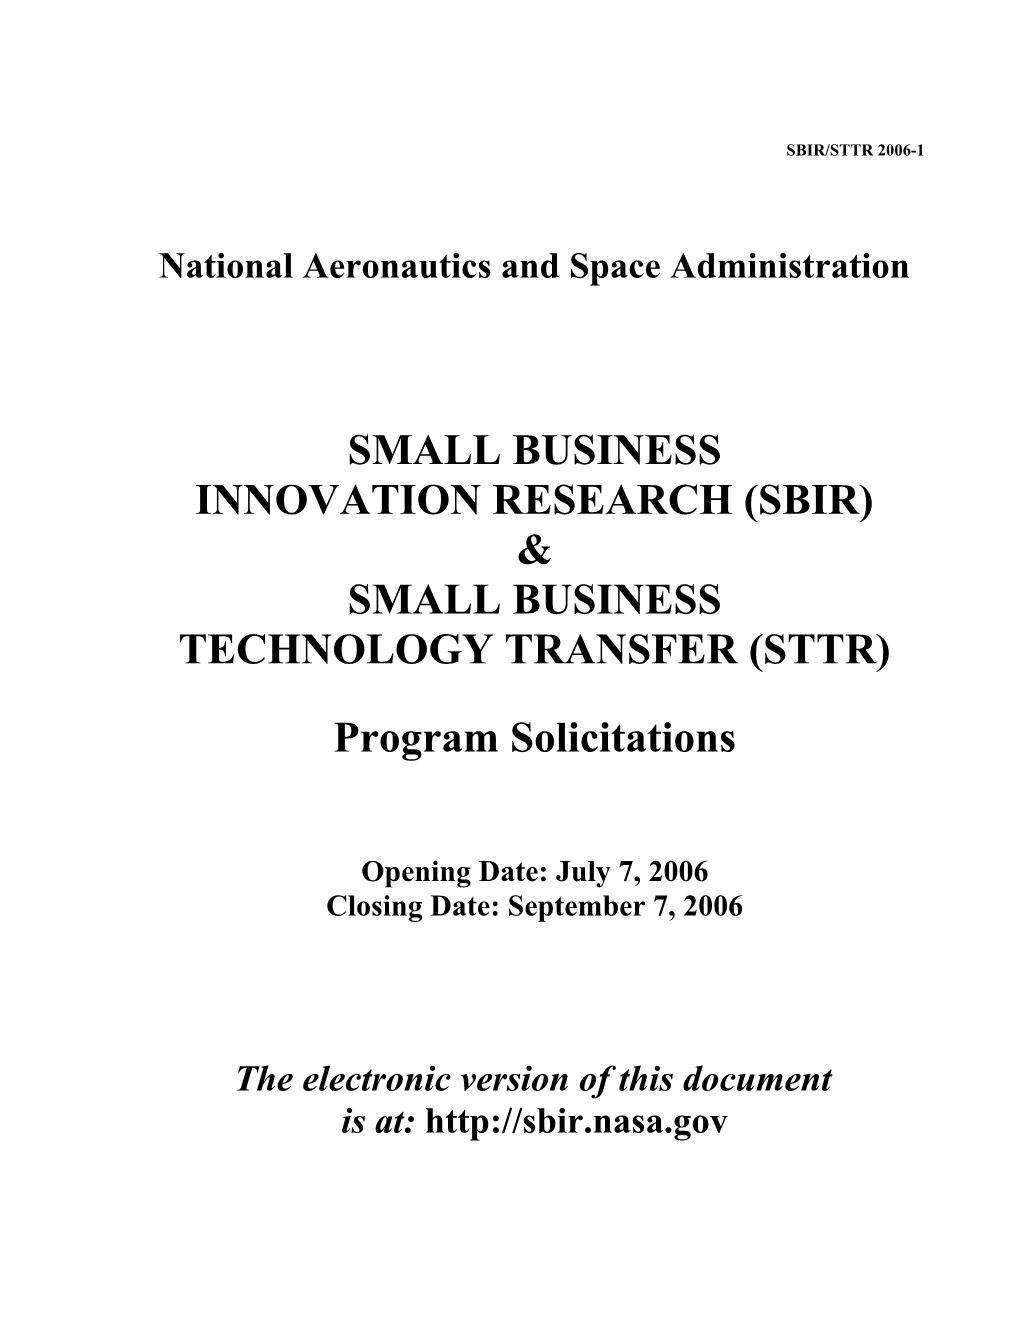 2000 NASA Small Business Innovation Research Program Solicitation